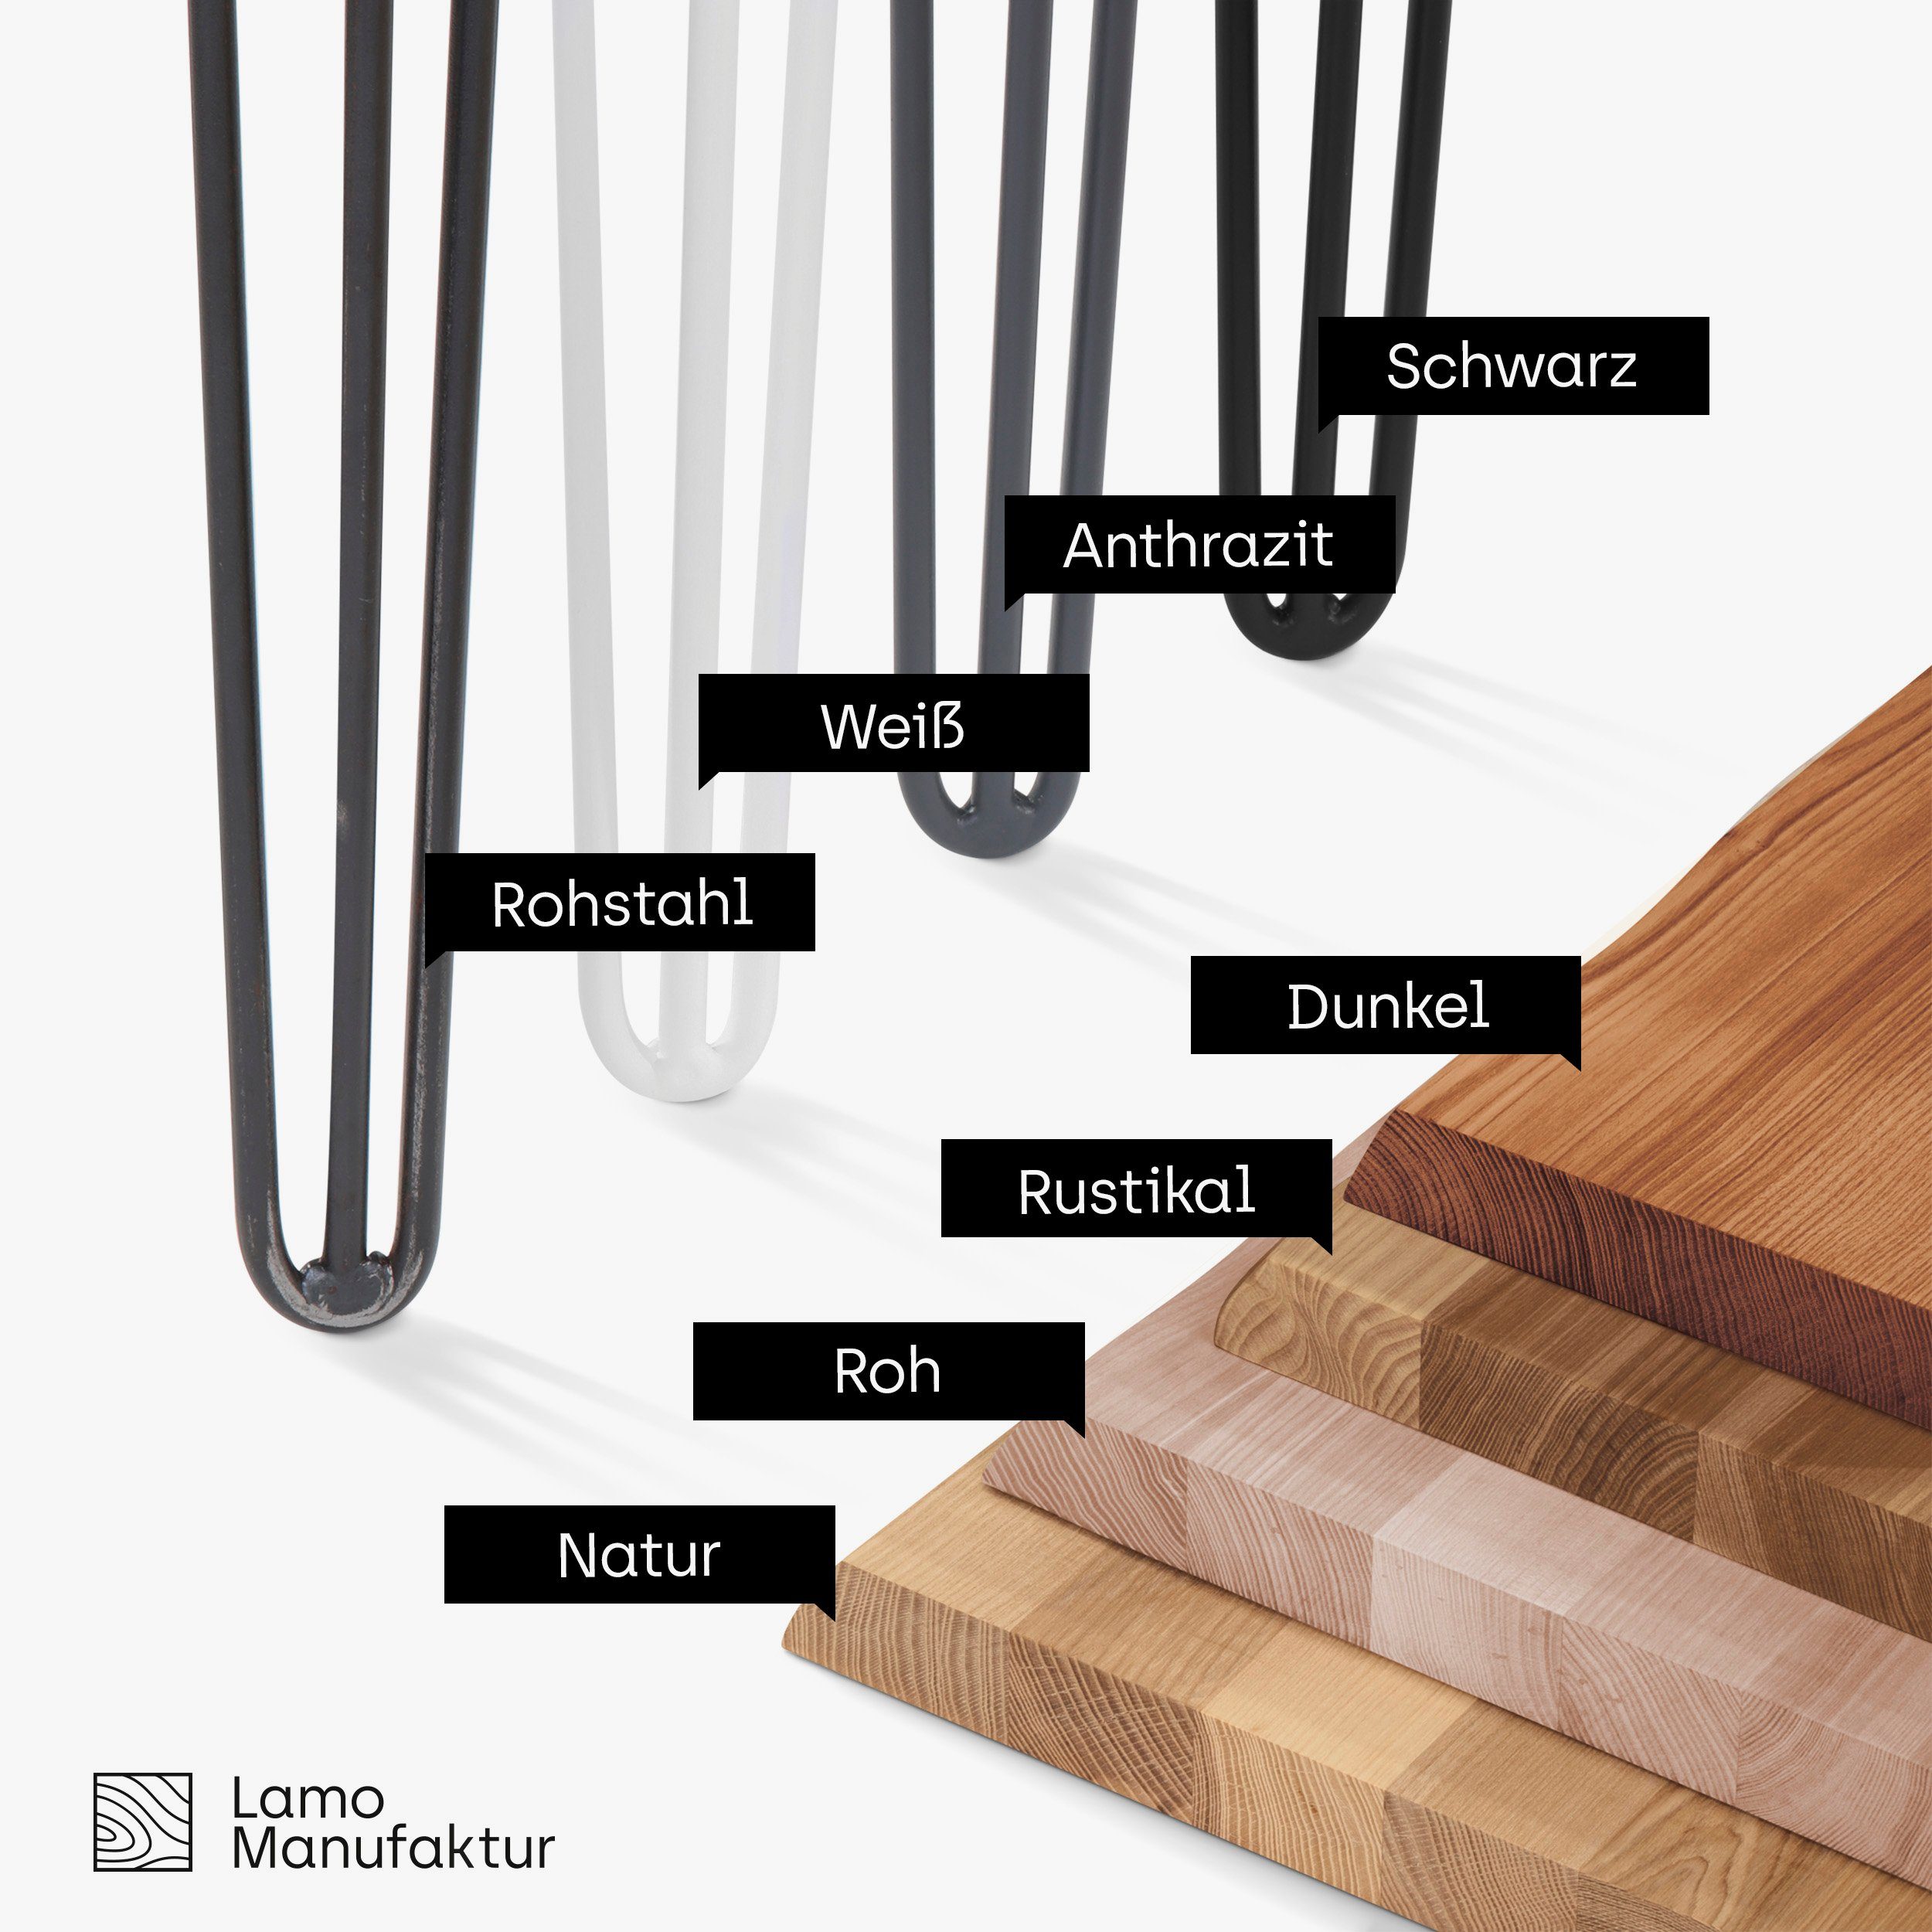 Massivholz massiv (1 | inkl. LAMO Manufaktur Creative Baumkantentisch Rustikal Tisch), Anthrazit Baumkante Esstisch Metallgestell